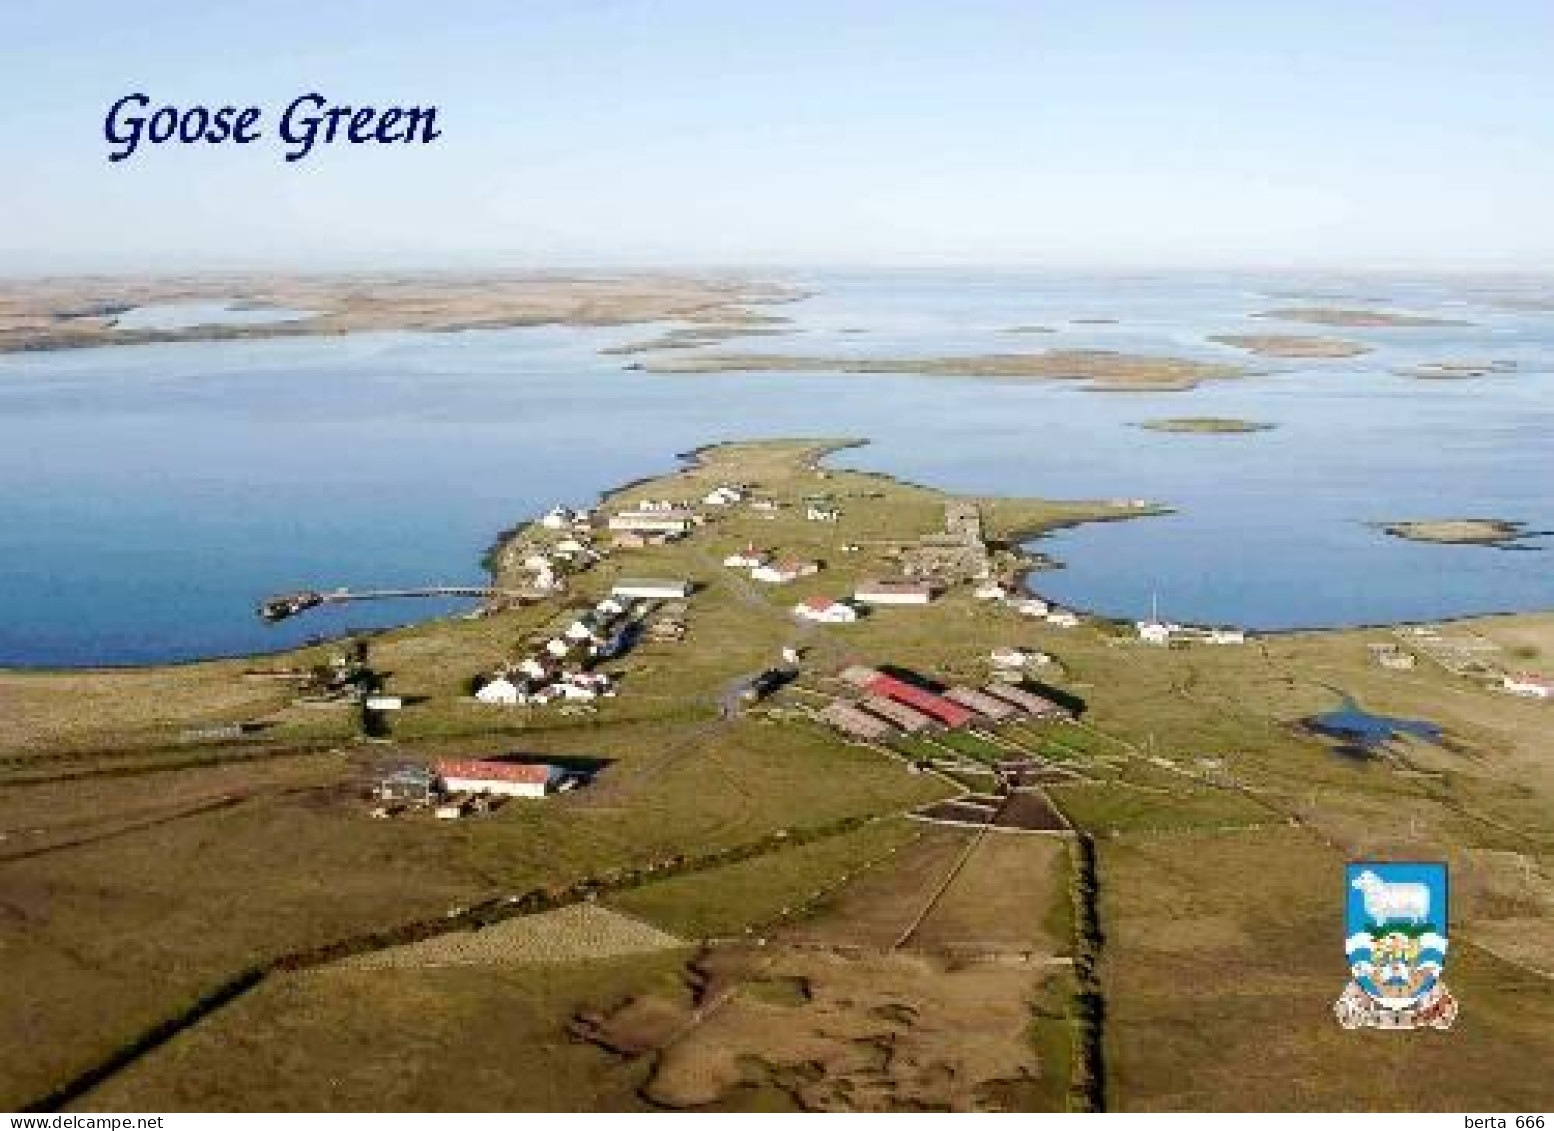 Falklands Islands Goose Green Malvinas New Postcard - Falkland